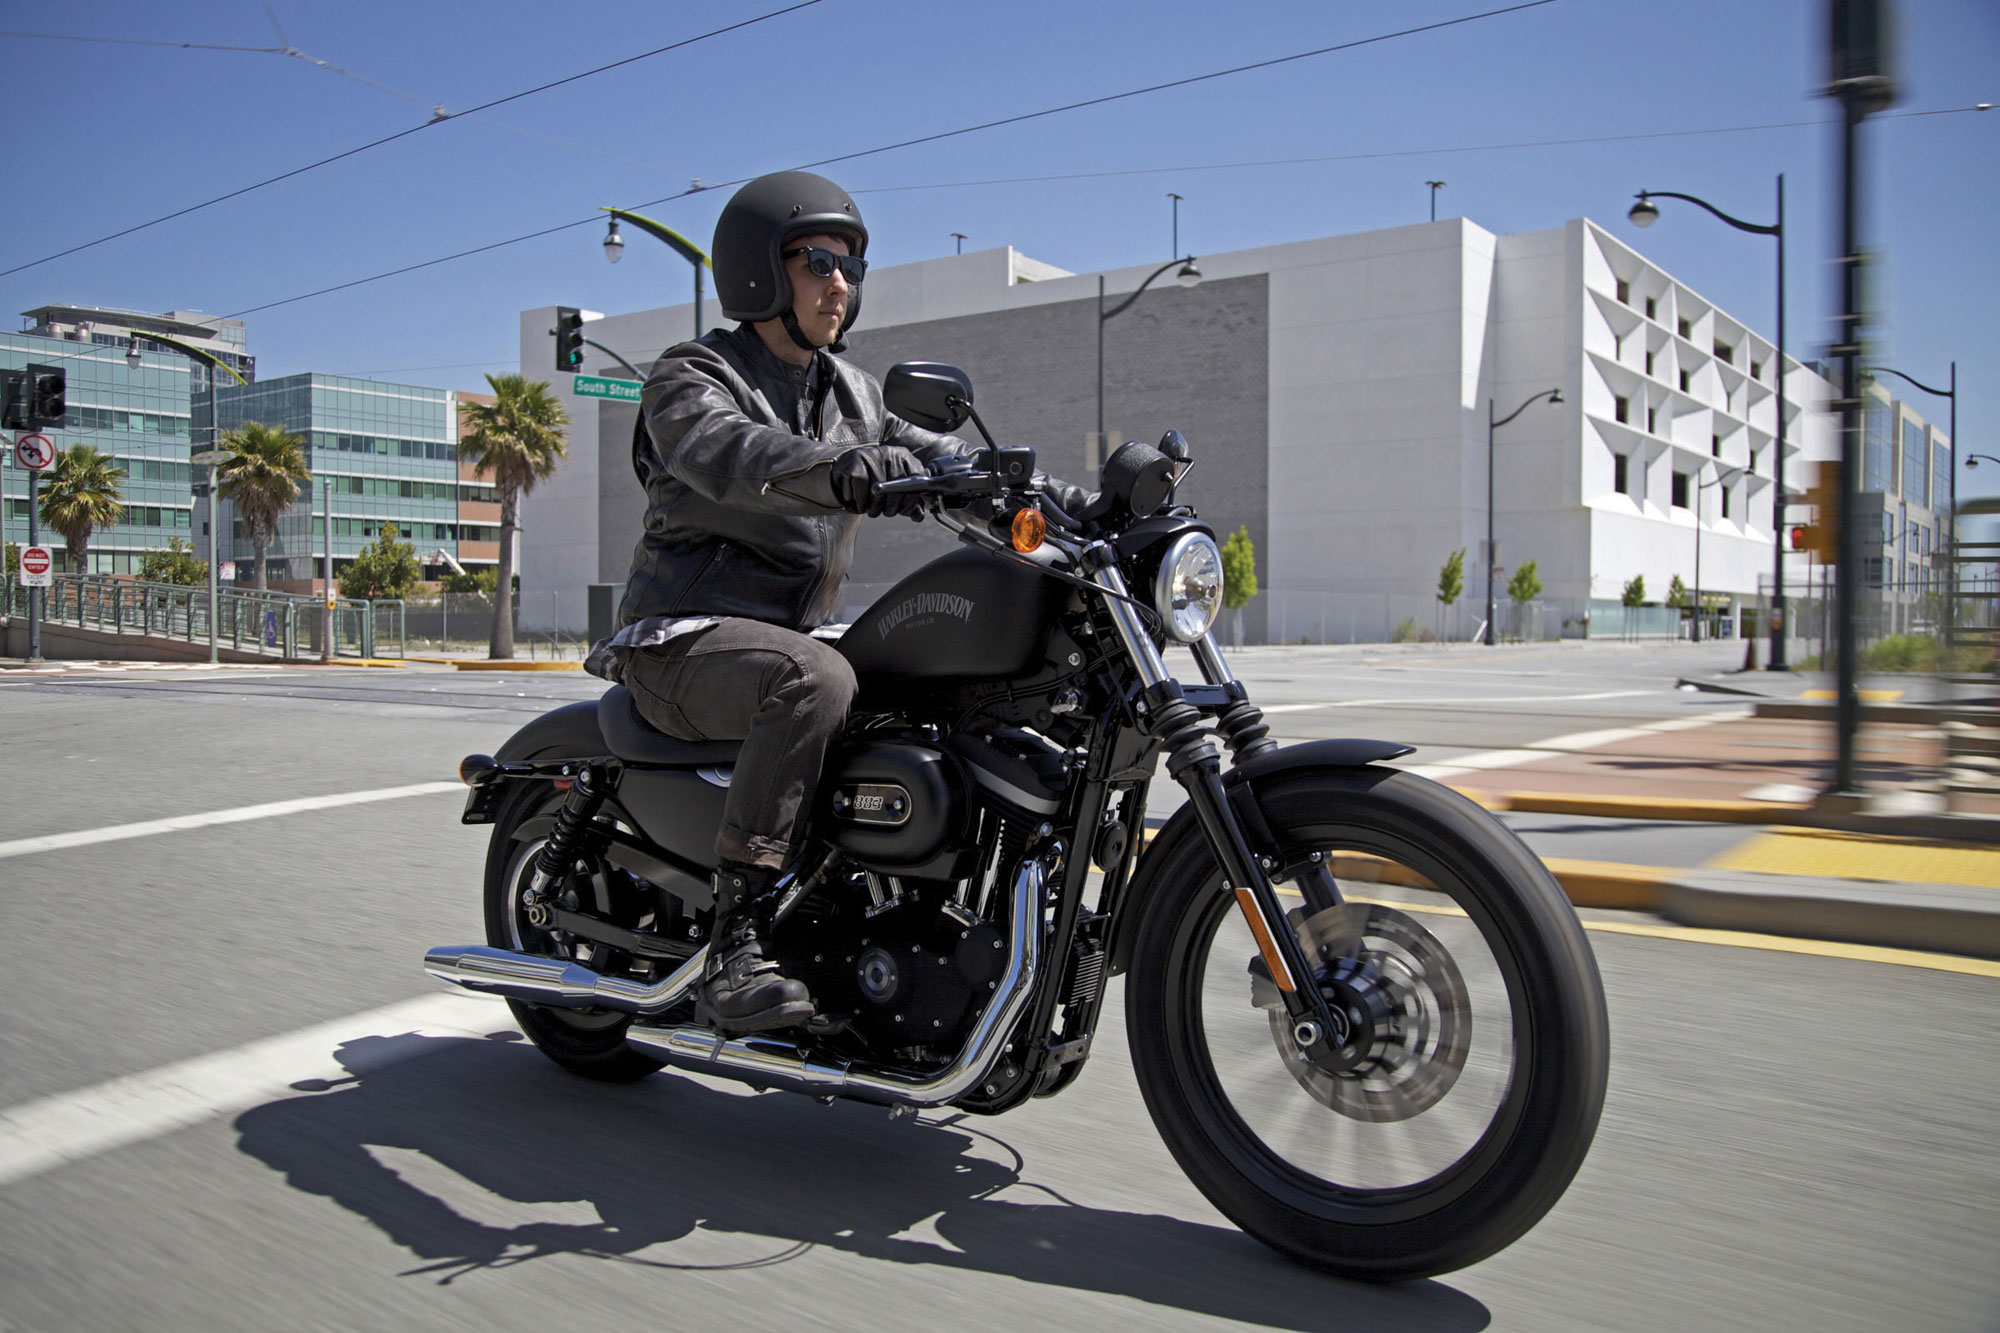 2013 Harley Davidson Xl883n Iron 883 Review